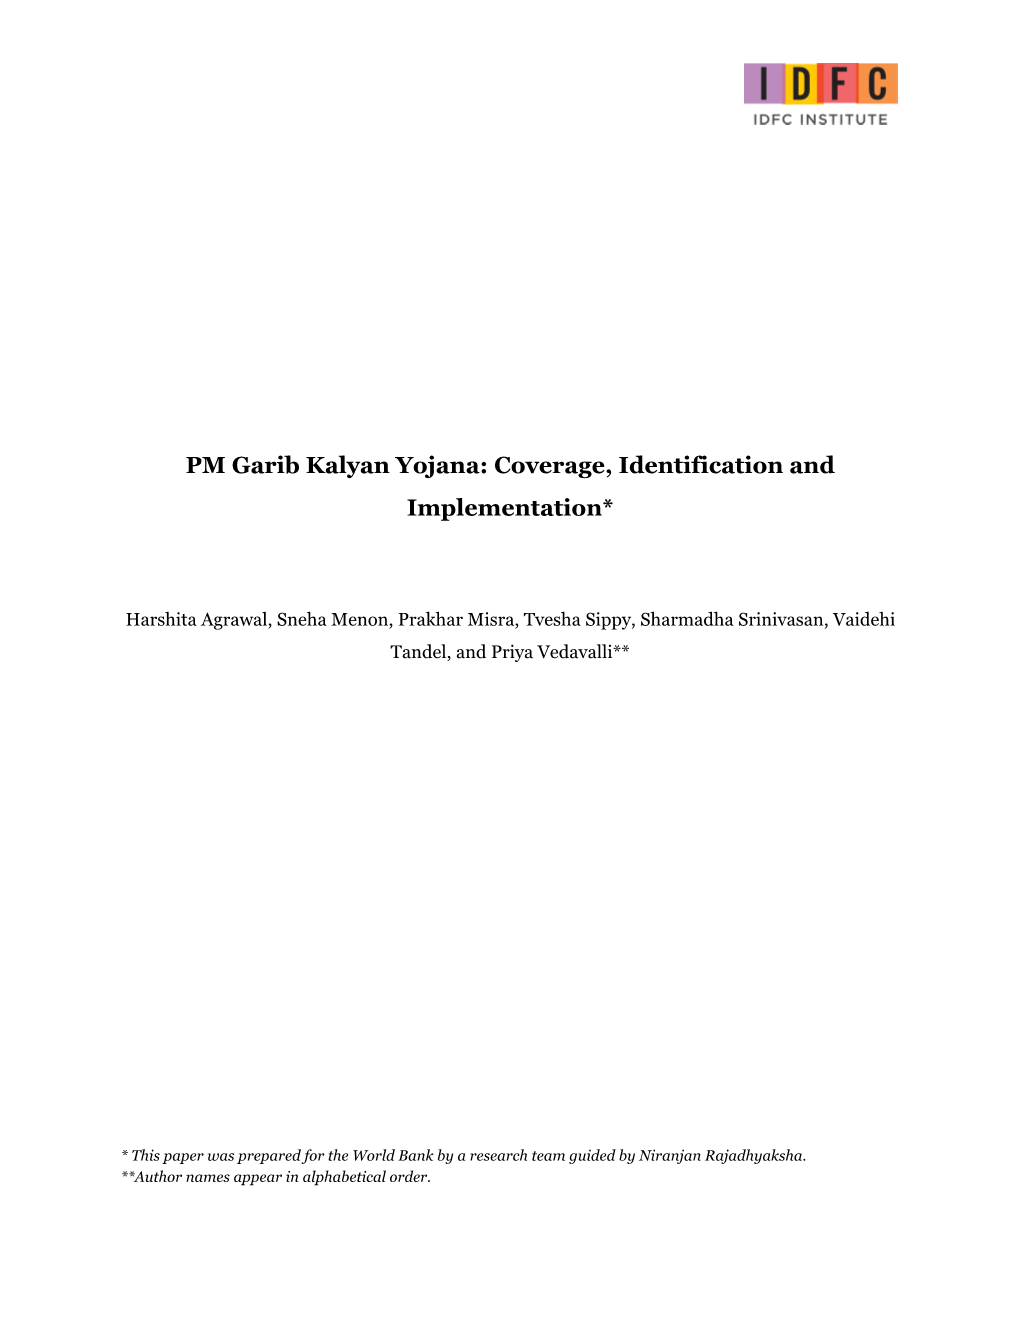 PM Garib Kalyan Yojana: Coverage, Identification and Implementation*